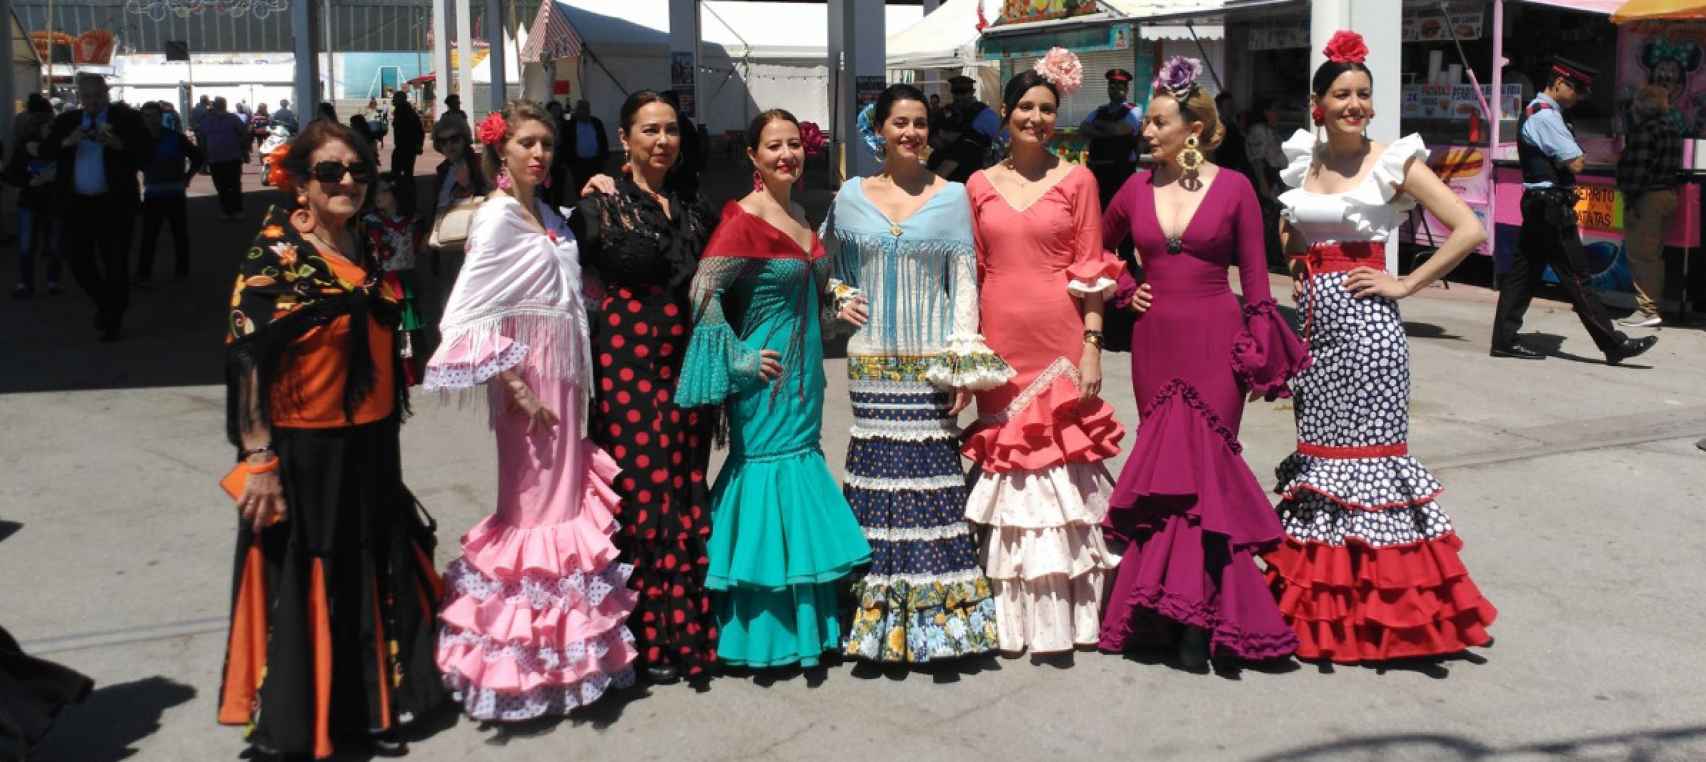 Inés Arrimadas posa vestida de sevillana en la Feria de Abril de Barcelona.